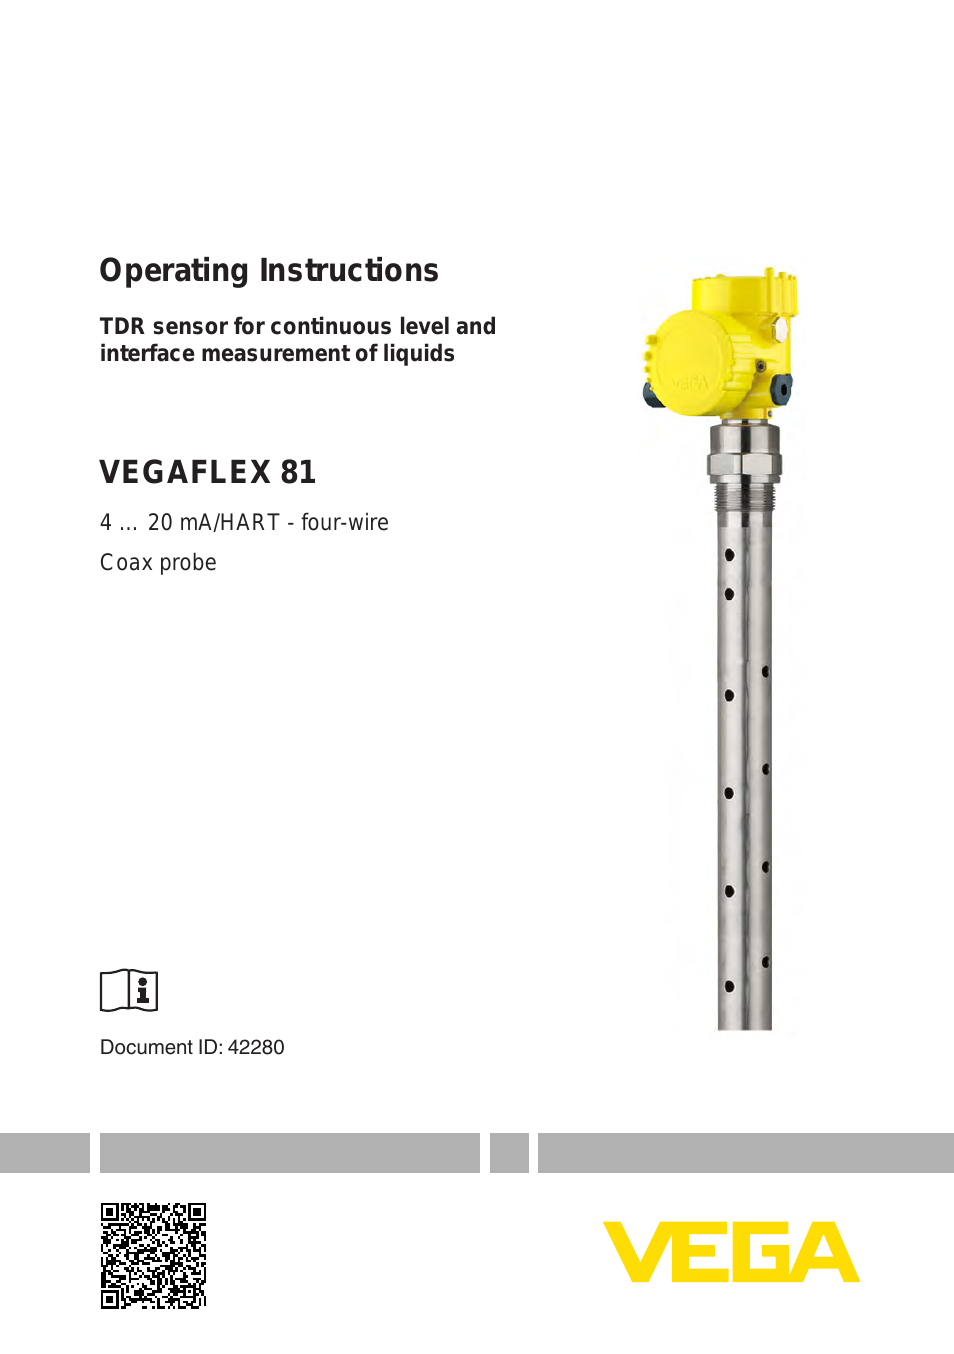 VEGAFLEX 81 4 … 20 mA_HART - four-wire Coax probe